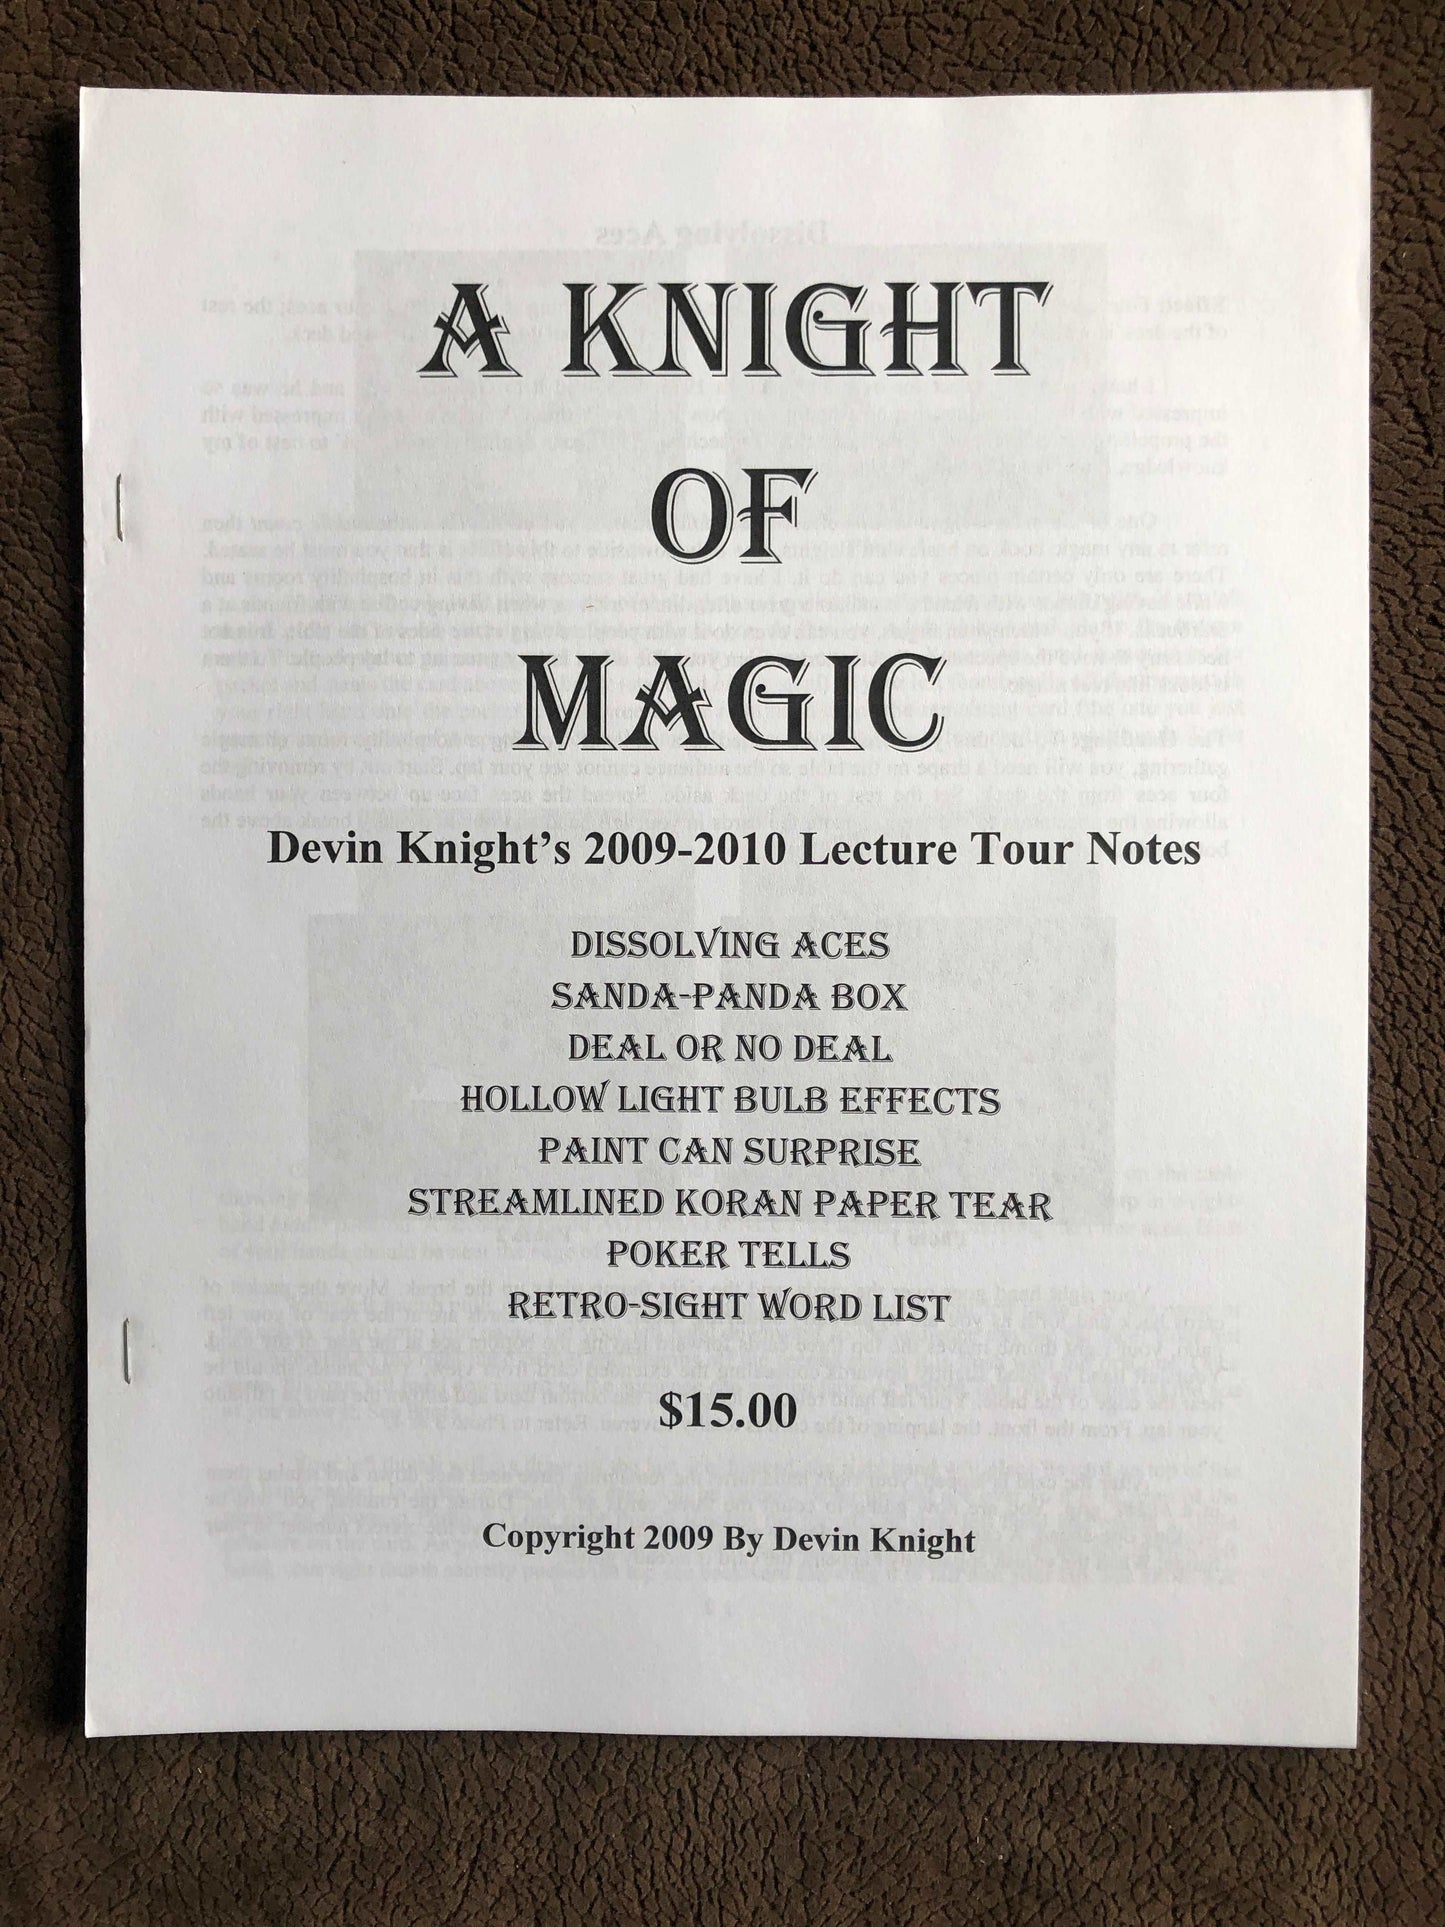 A Knight of Magic - Devin Knight